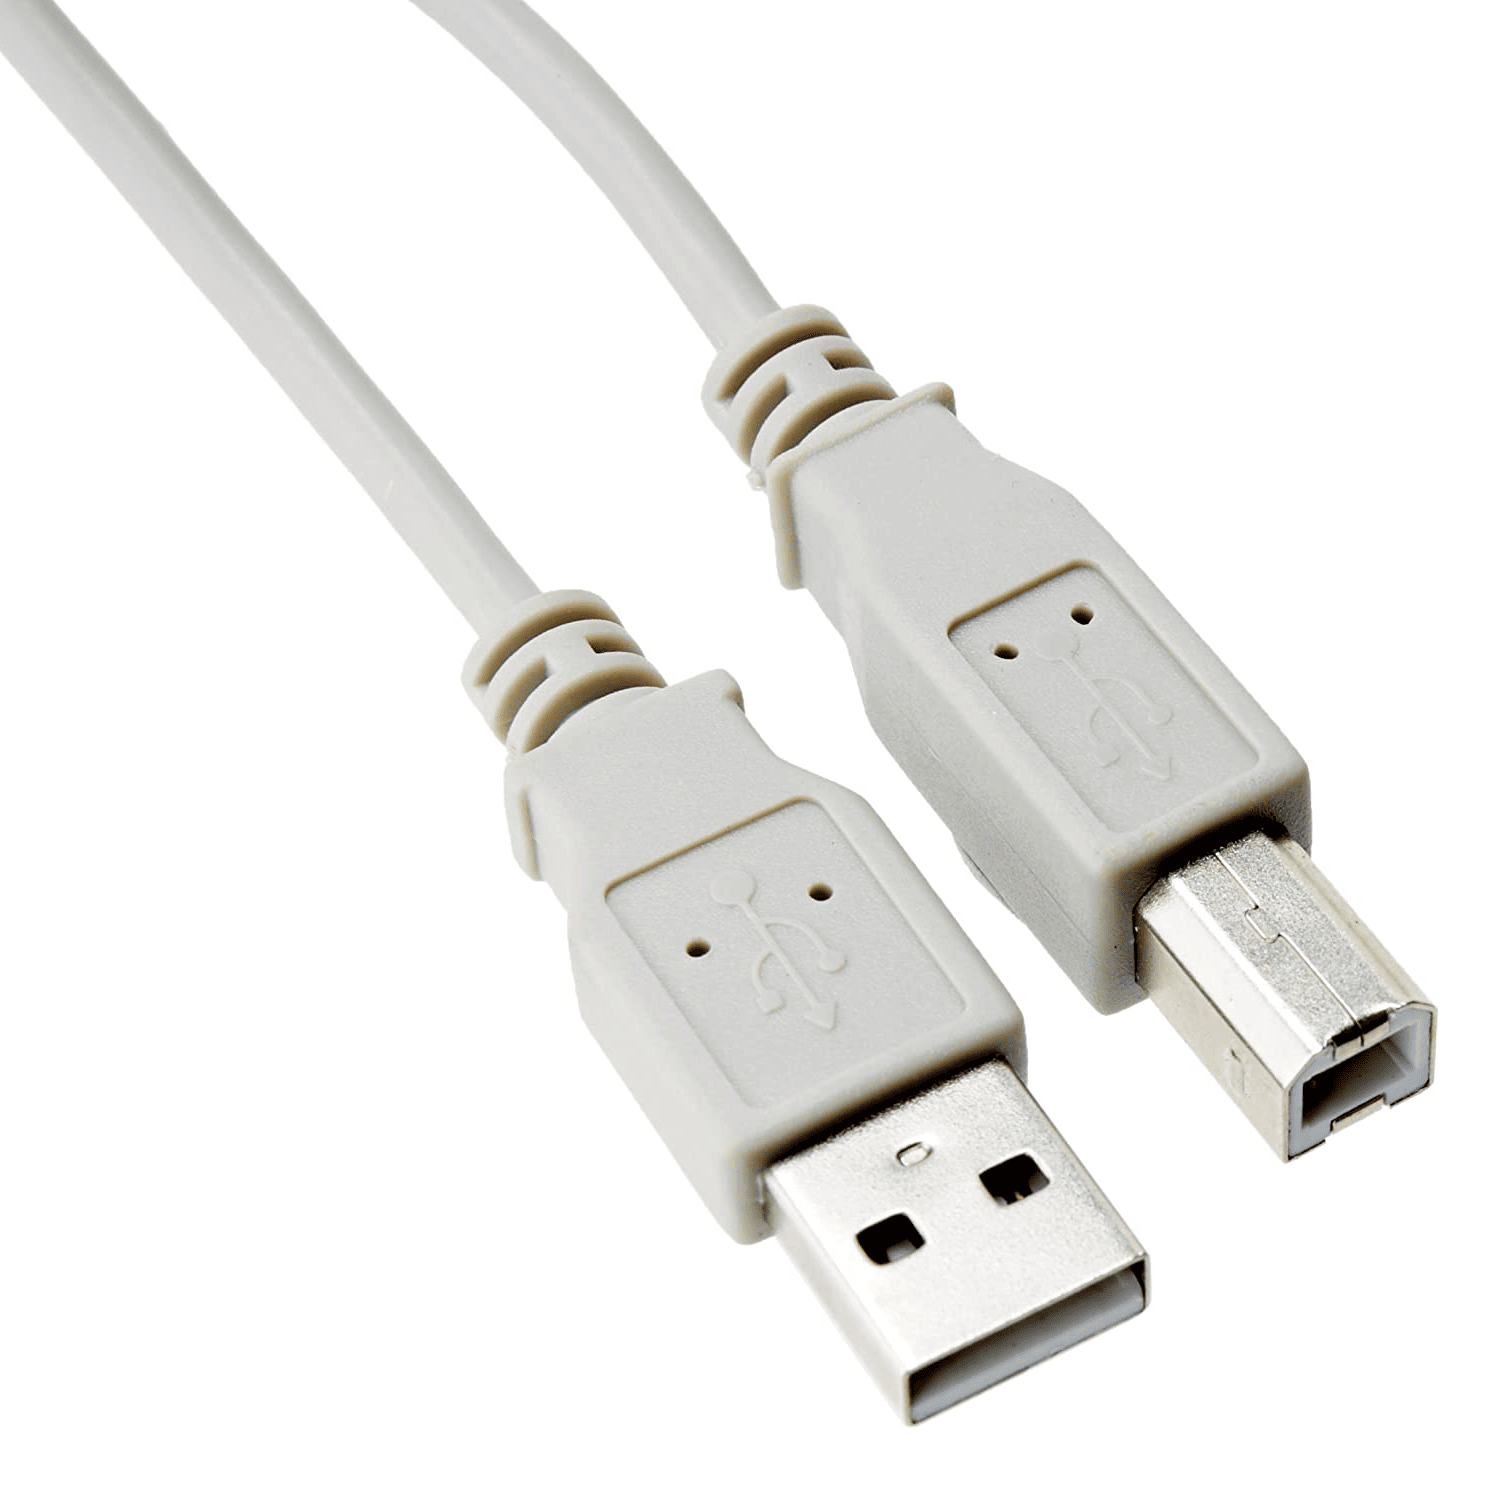 Cable USB 2.0 para impresora A/M-B/M 3 M Beige